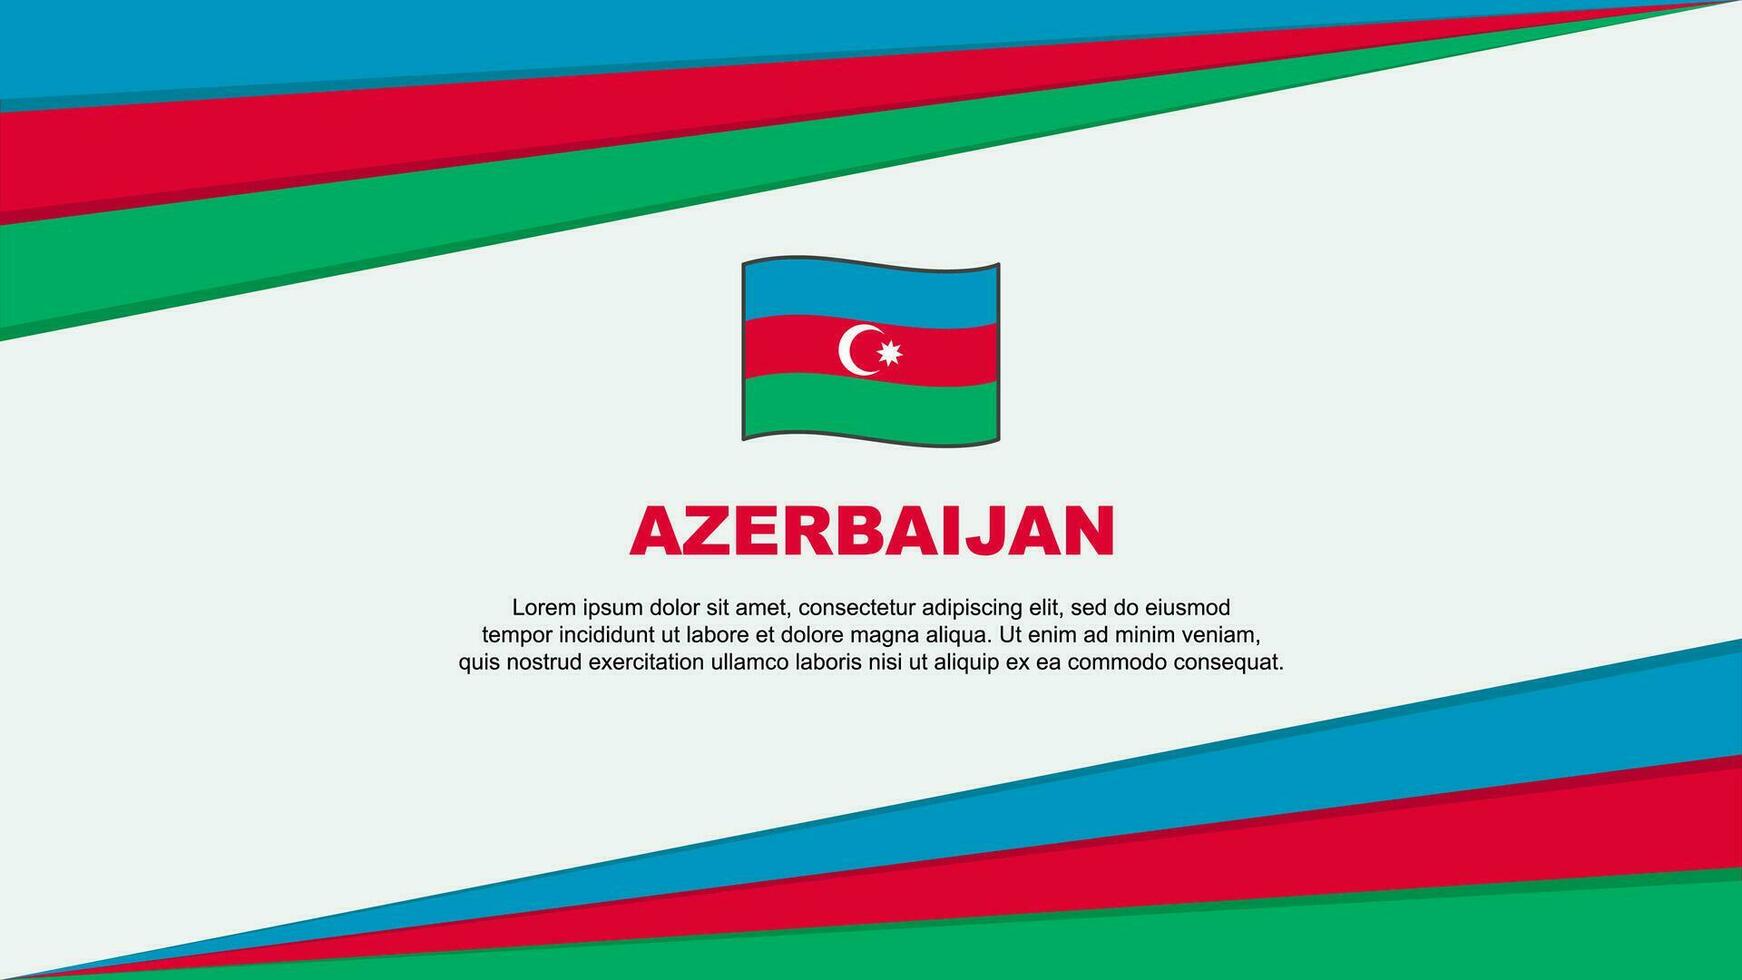 Azerbaijan Flag Abstract Background Design Template. Azerbaijan Independence Day Banner Cartoon Vector Illustration. Azerbaijan Design